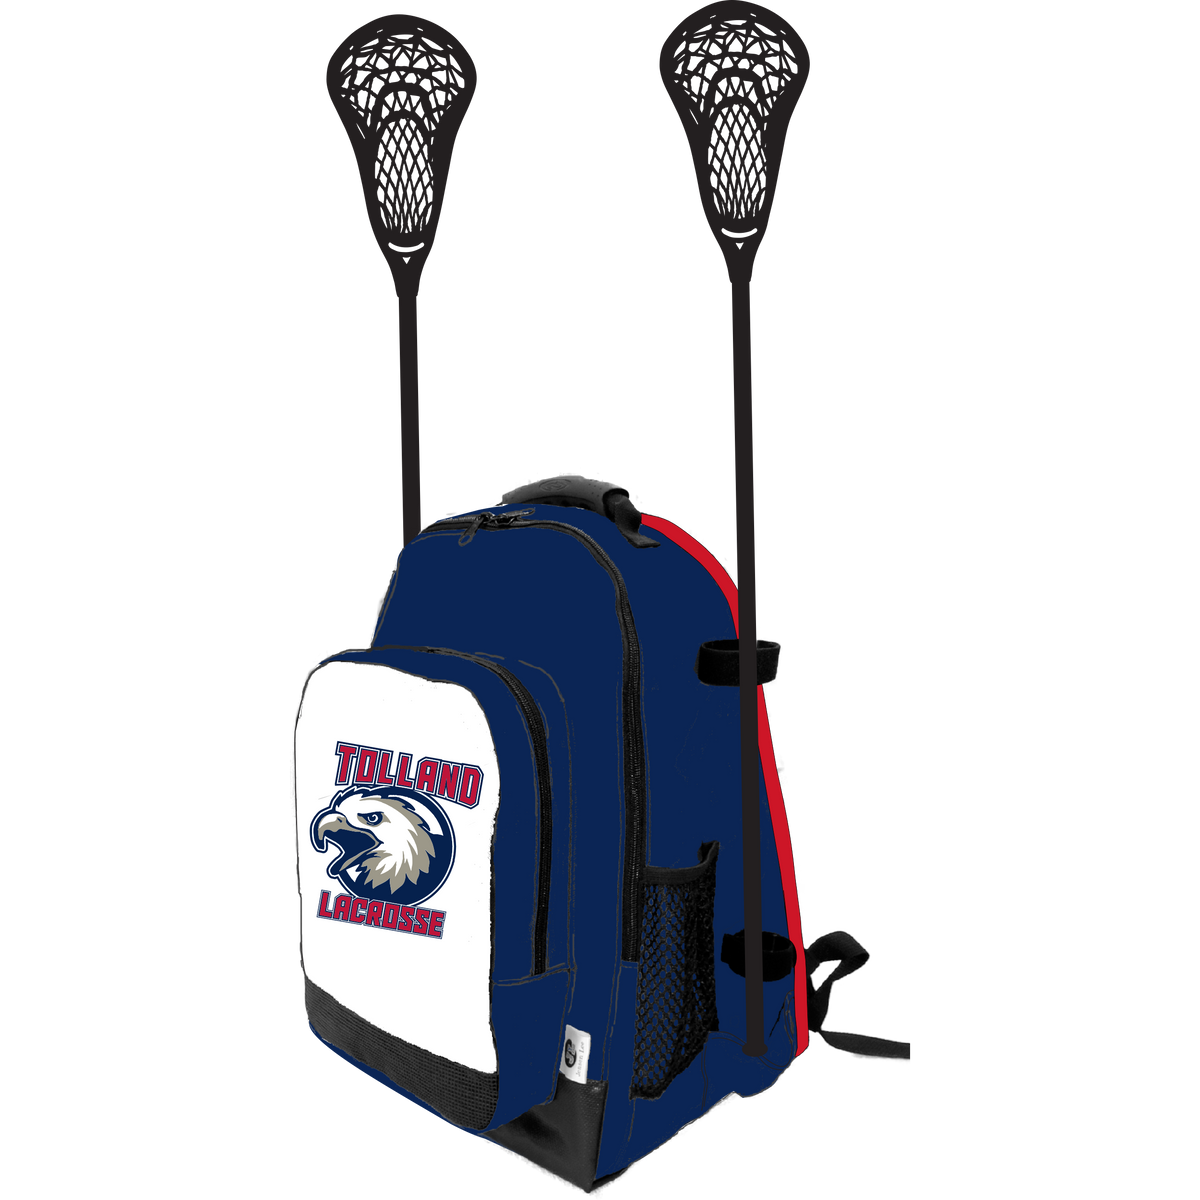 Tolland Lacrosse Side Lacrosse Stick Holder Small Backpack